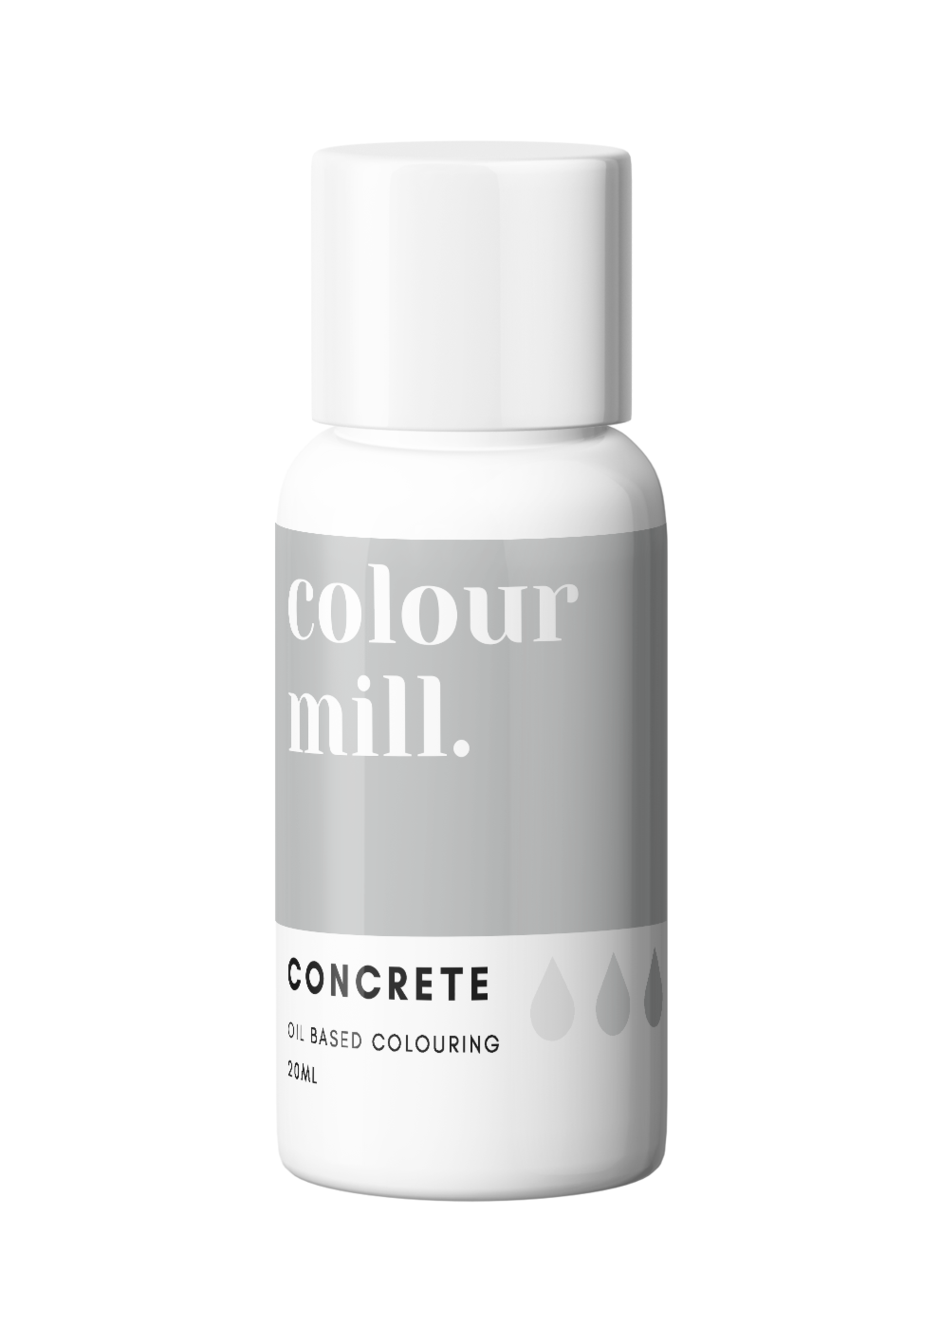 Concrete, 20ml, Colour Mill Oil Based Colouring